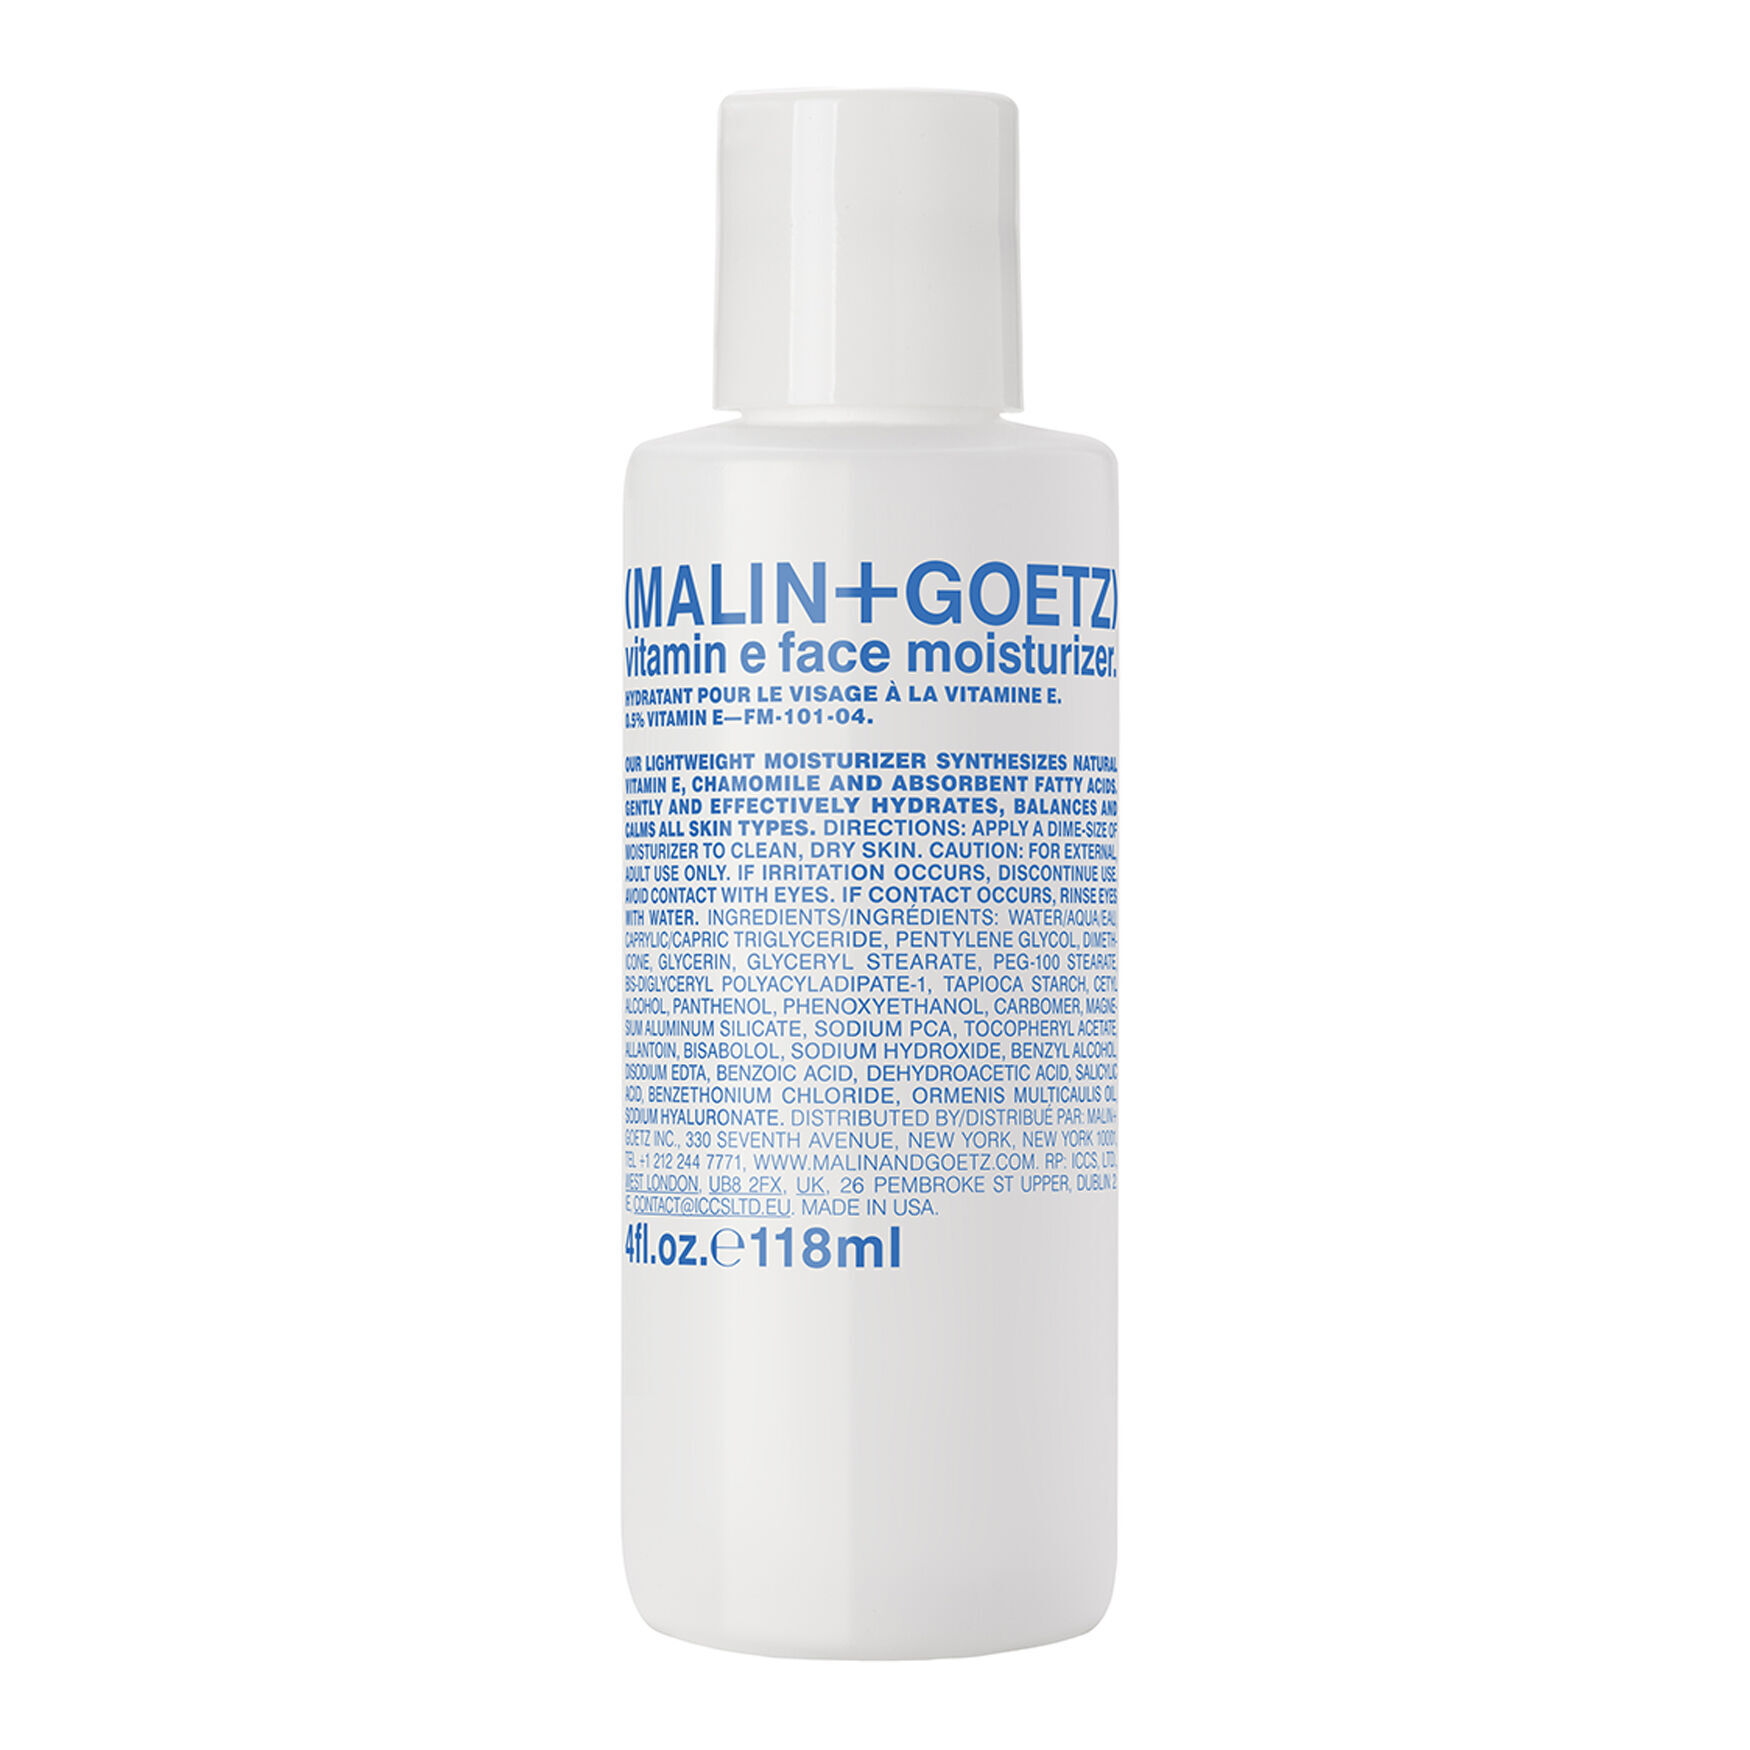 MALIN + GOETZ - Vitamin E Face Moisturizer by Malin + Goetz